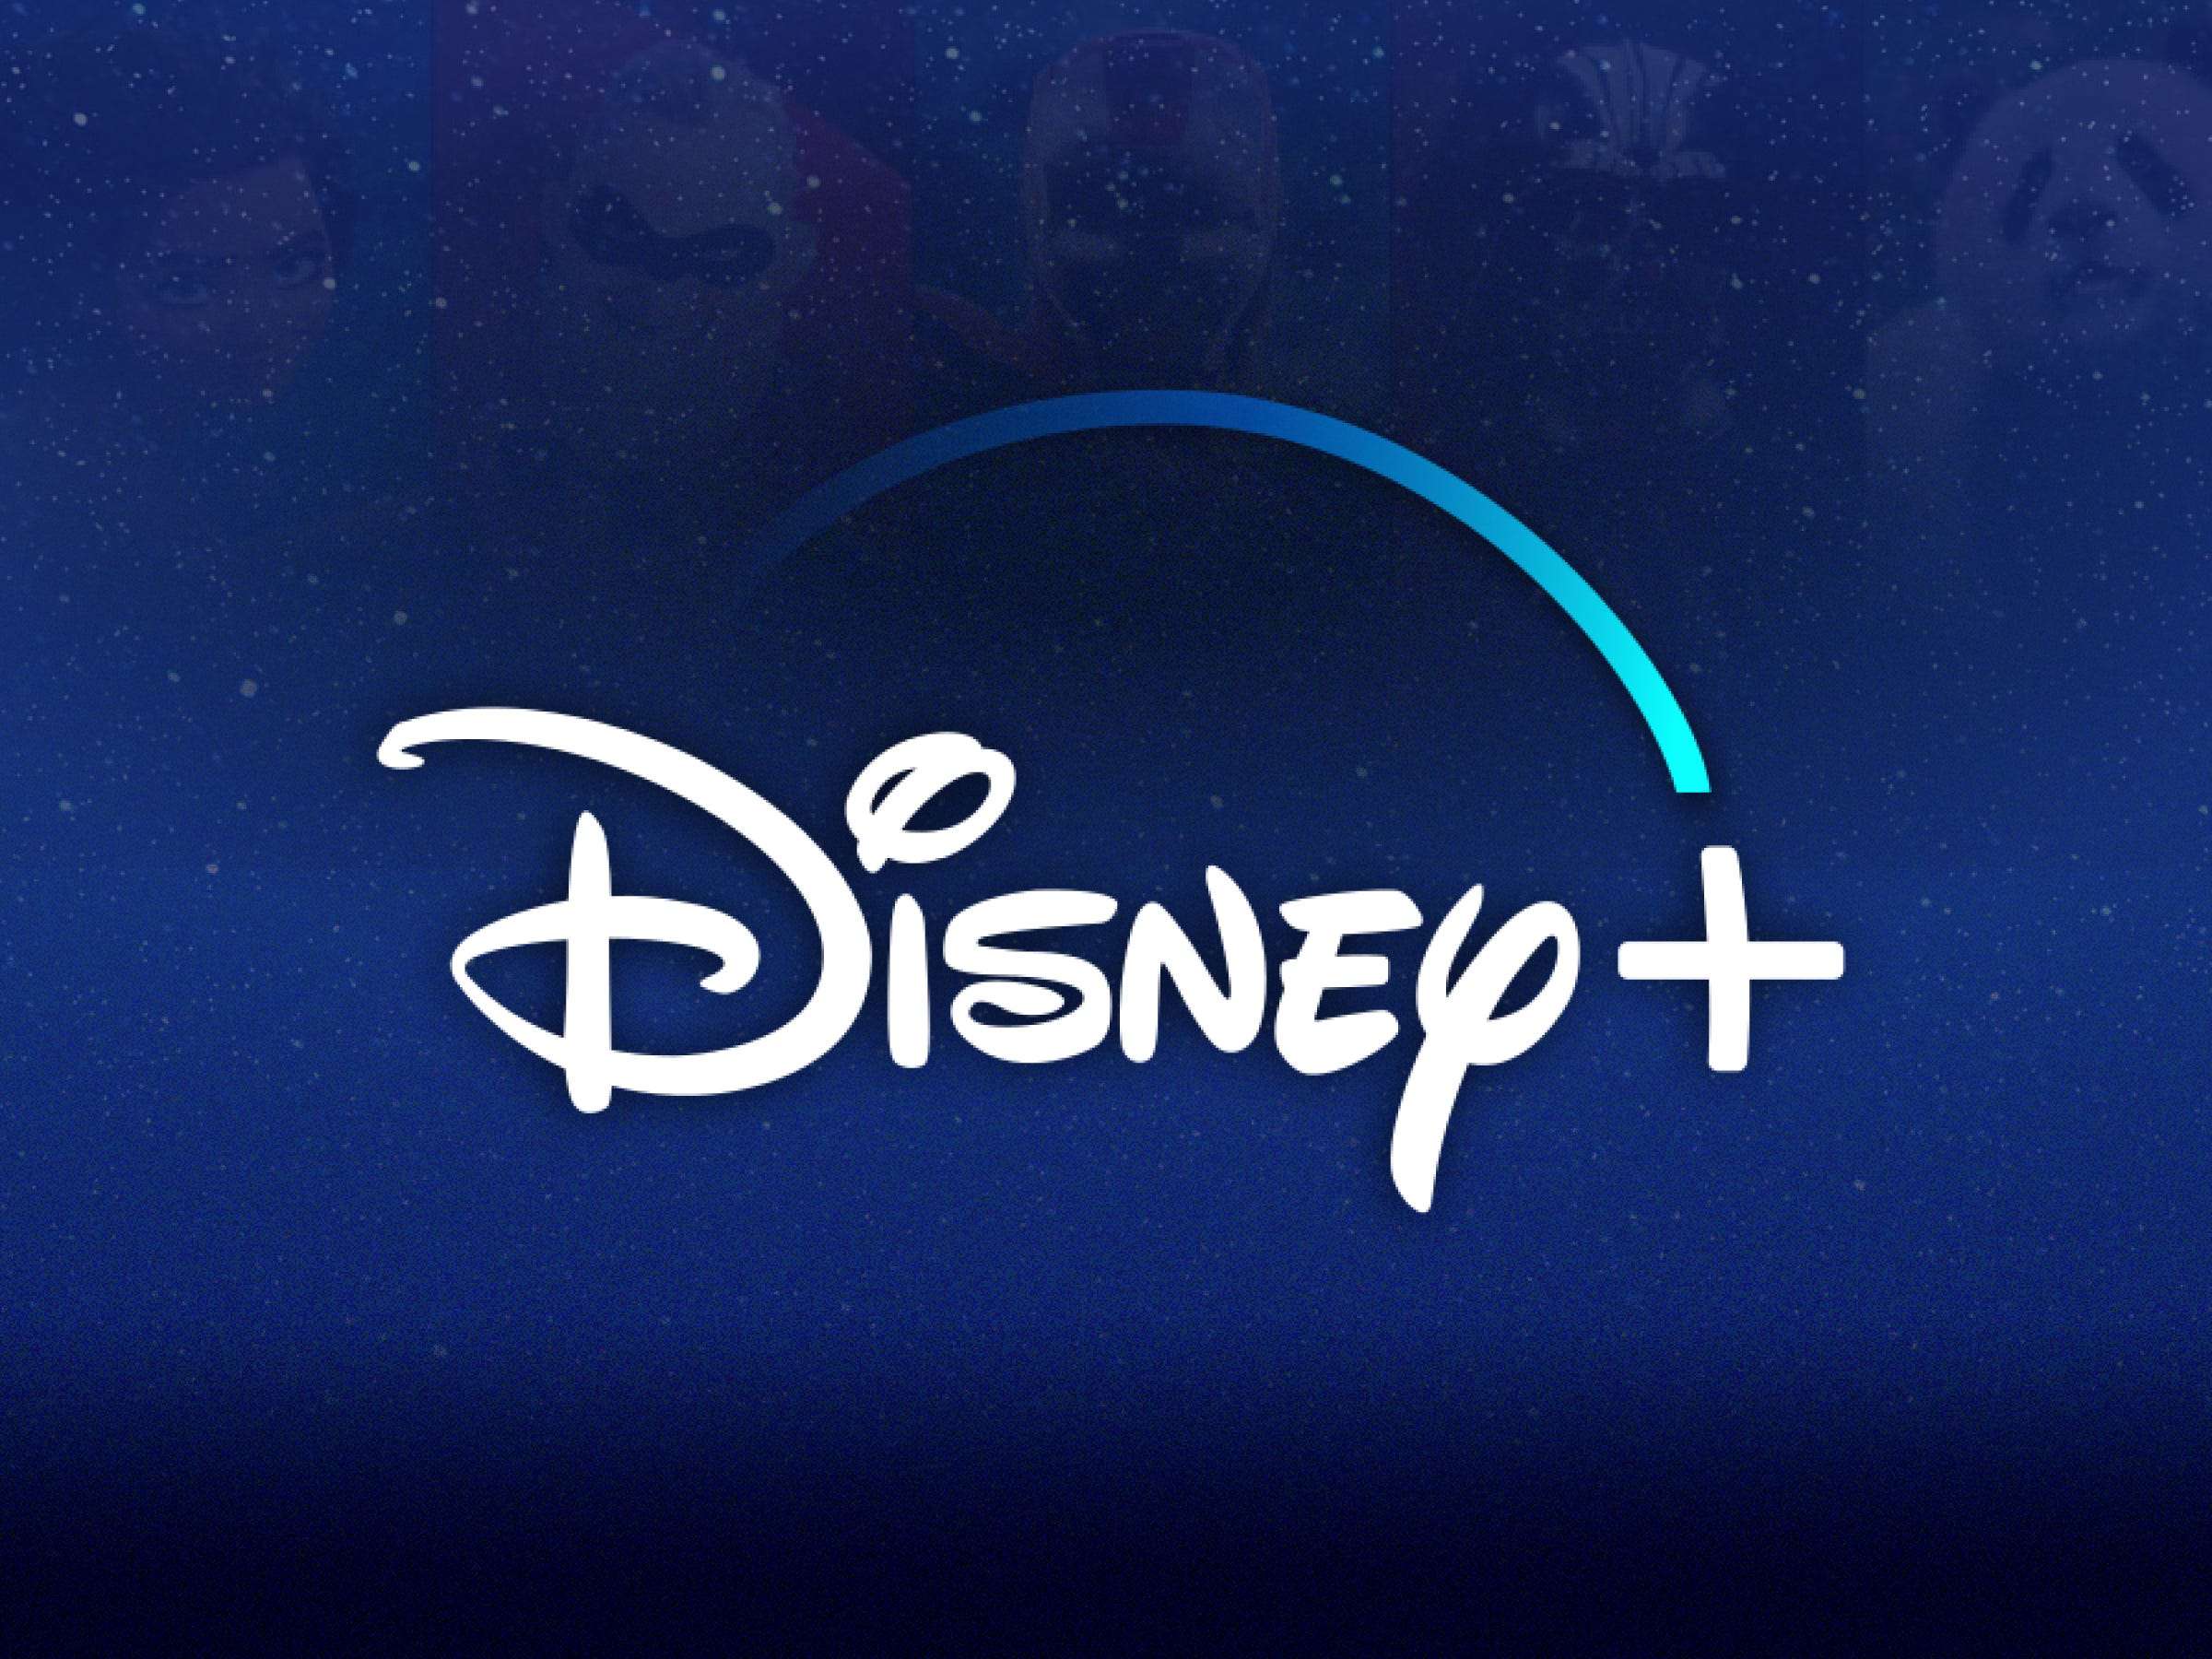 New disney plus logo. Дисней плюс. Disney+ logo. Disney+ logo PNG. Disney Plus sehereyada.